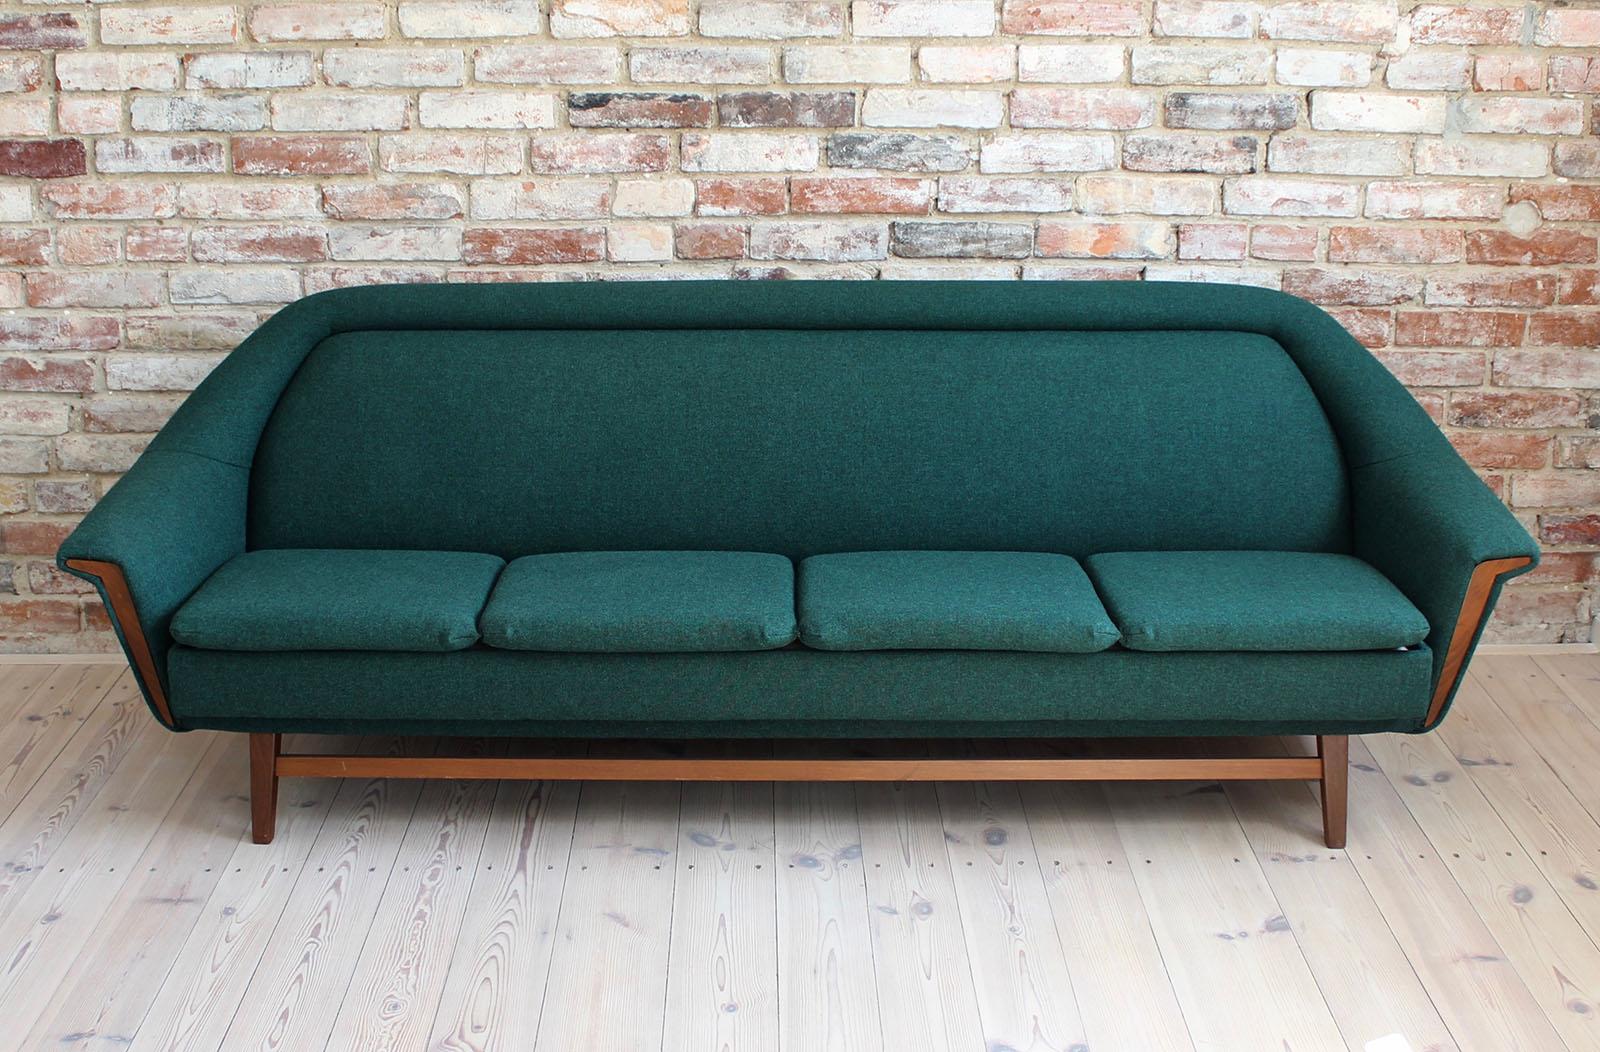 Scandinavian Modern Sofa Set by Holm Fabriker in Emerald Green Kvadrat Fabric, Mid-Century Modern